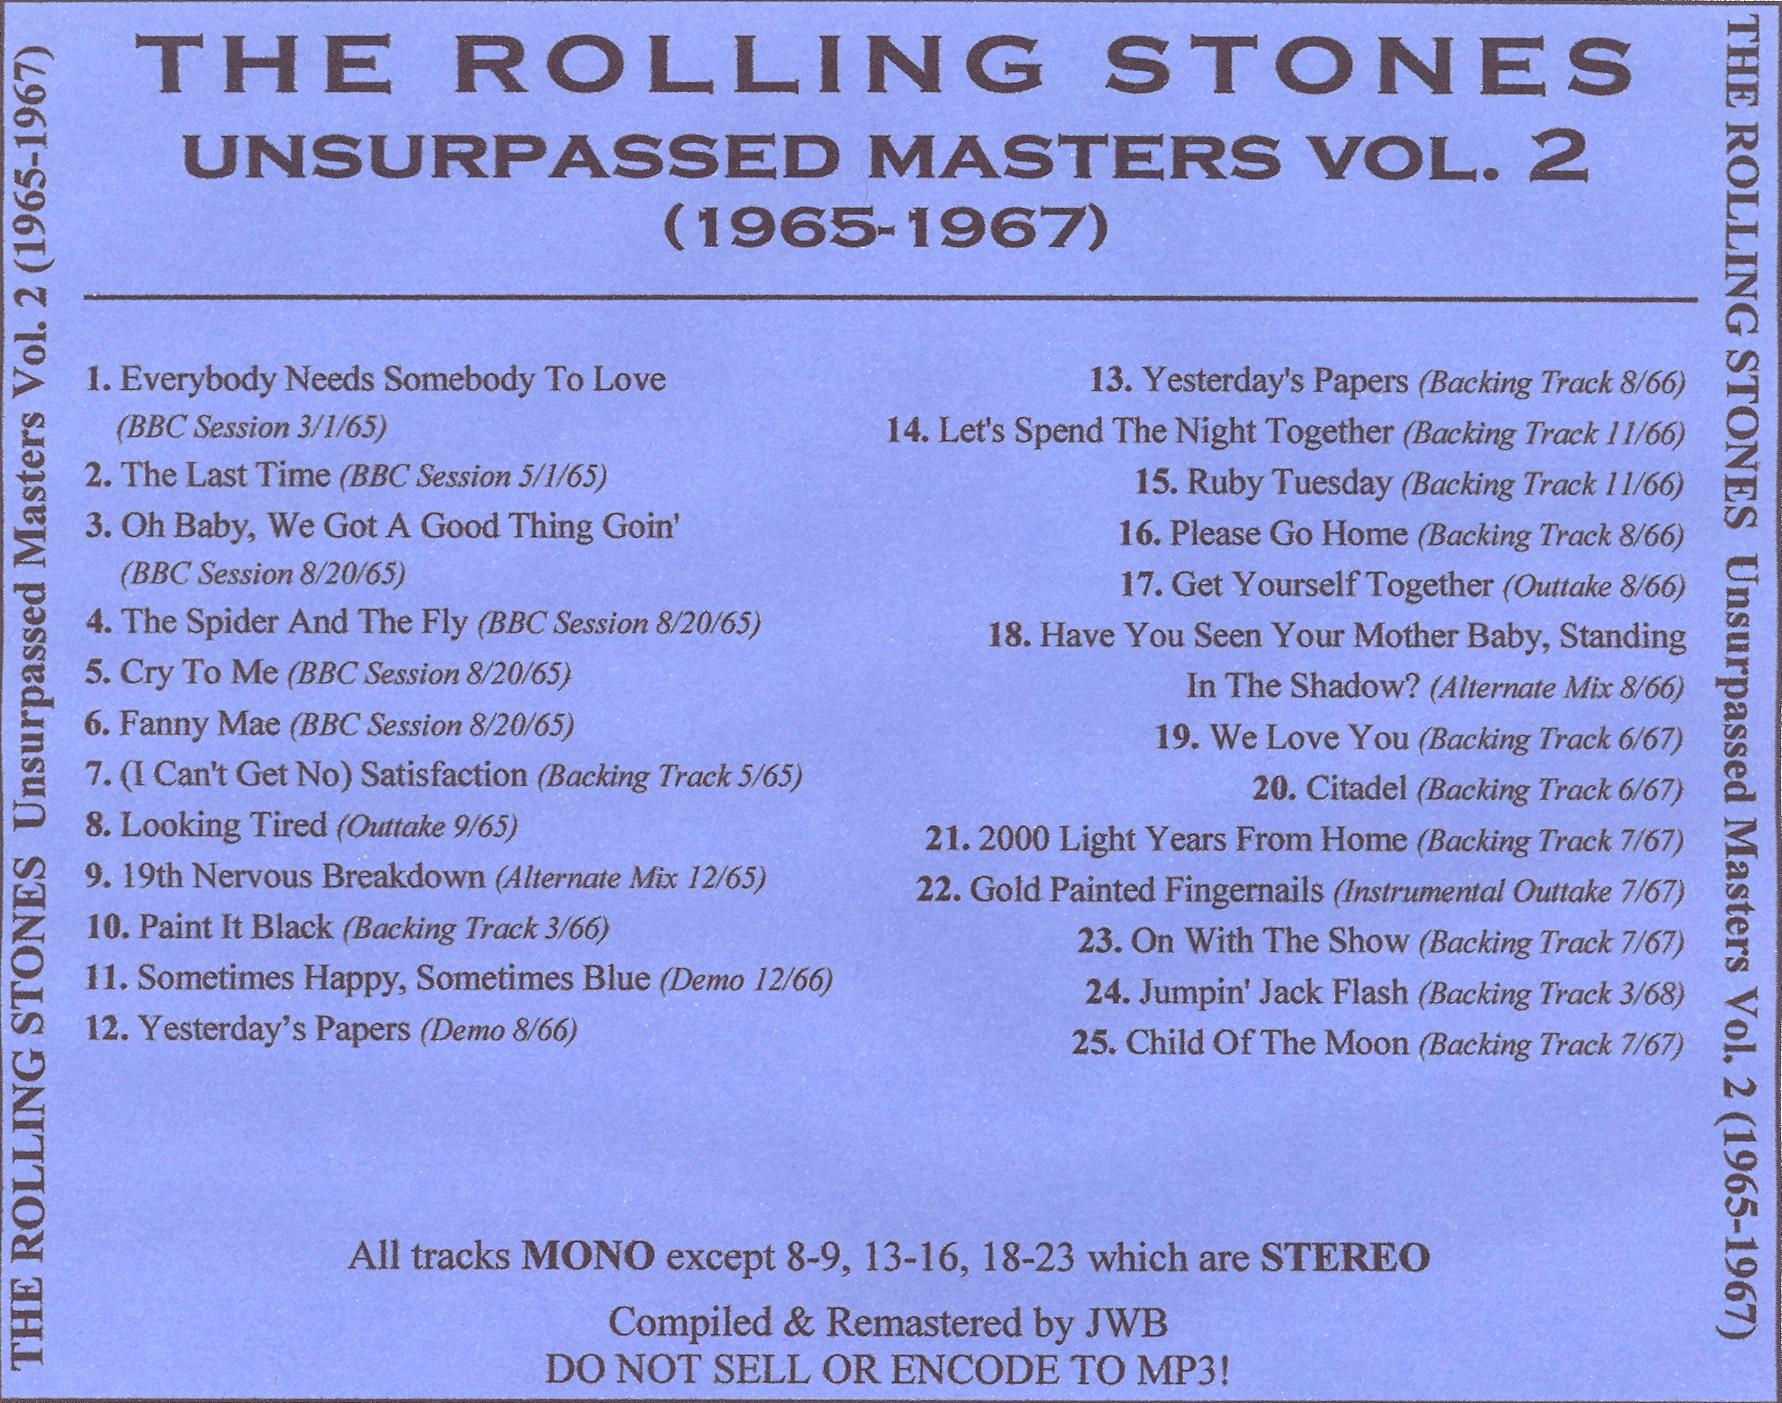 RollingStones1965-1967UnsurpassedMastersVol2 (1).jpg